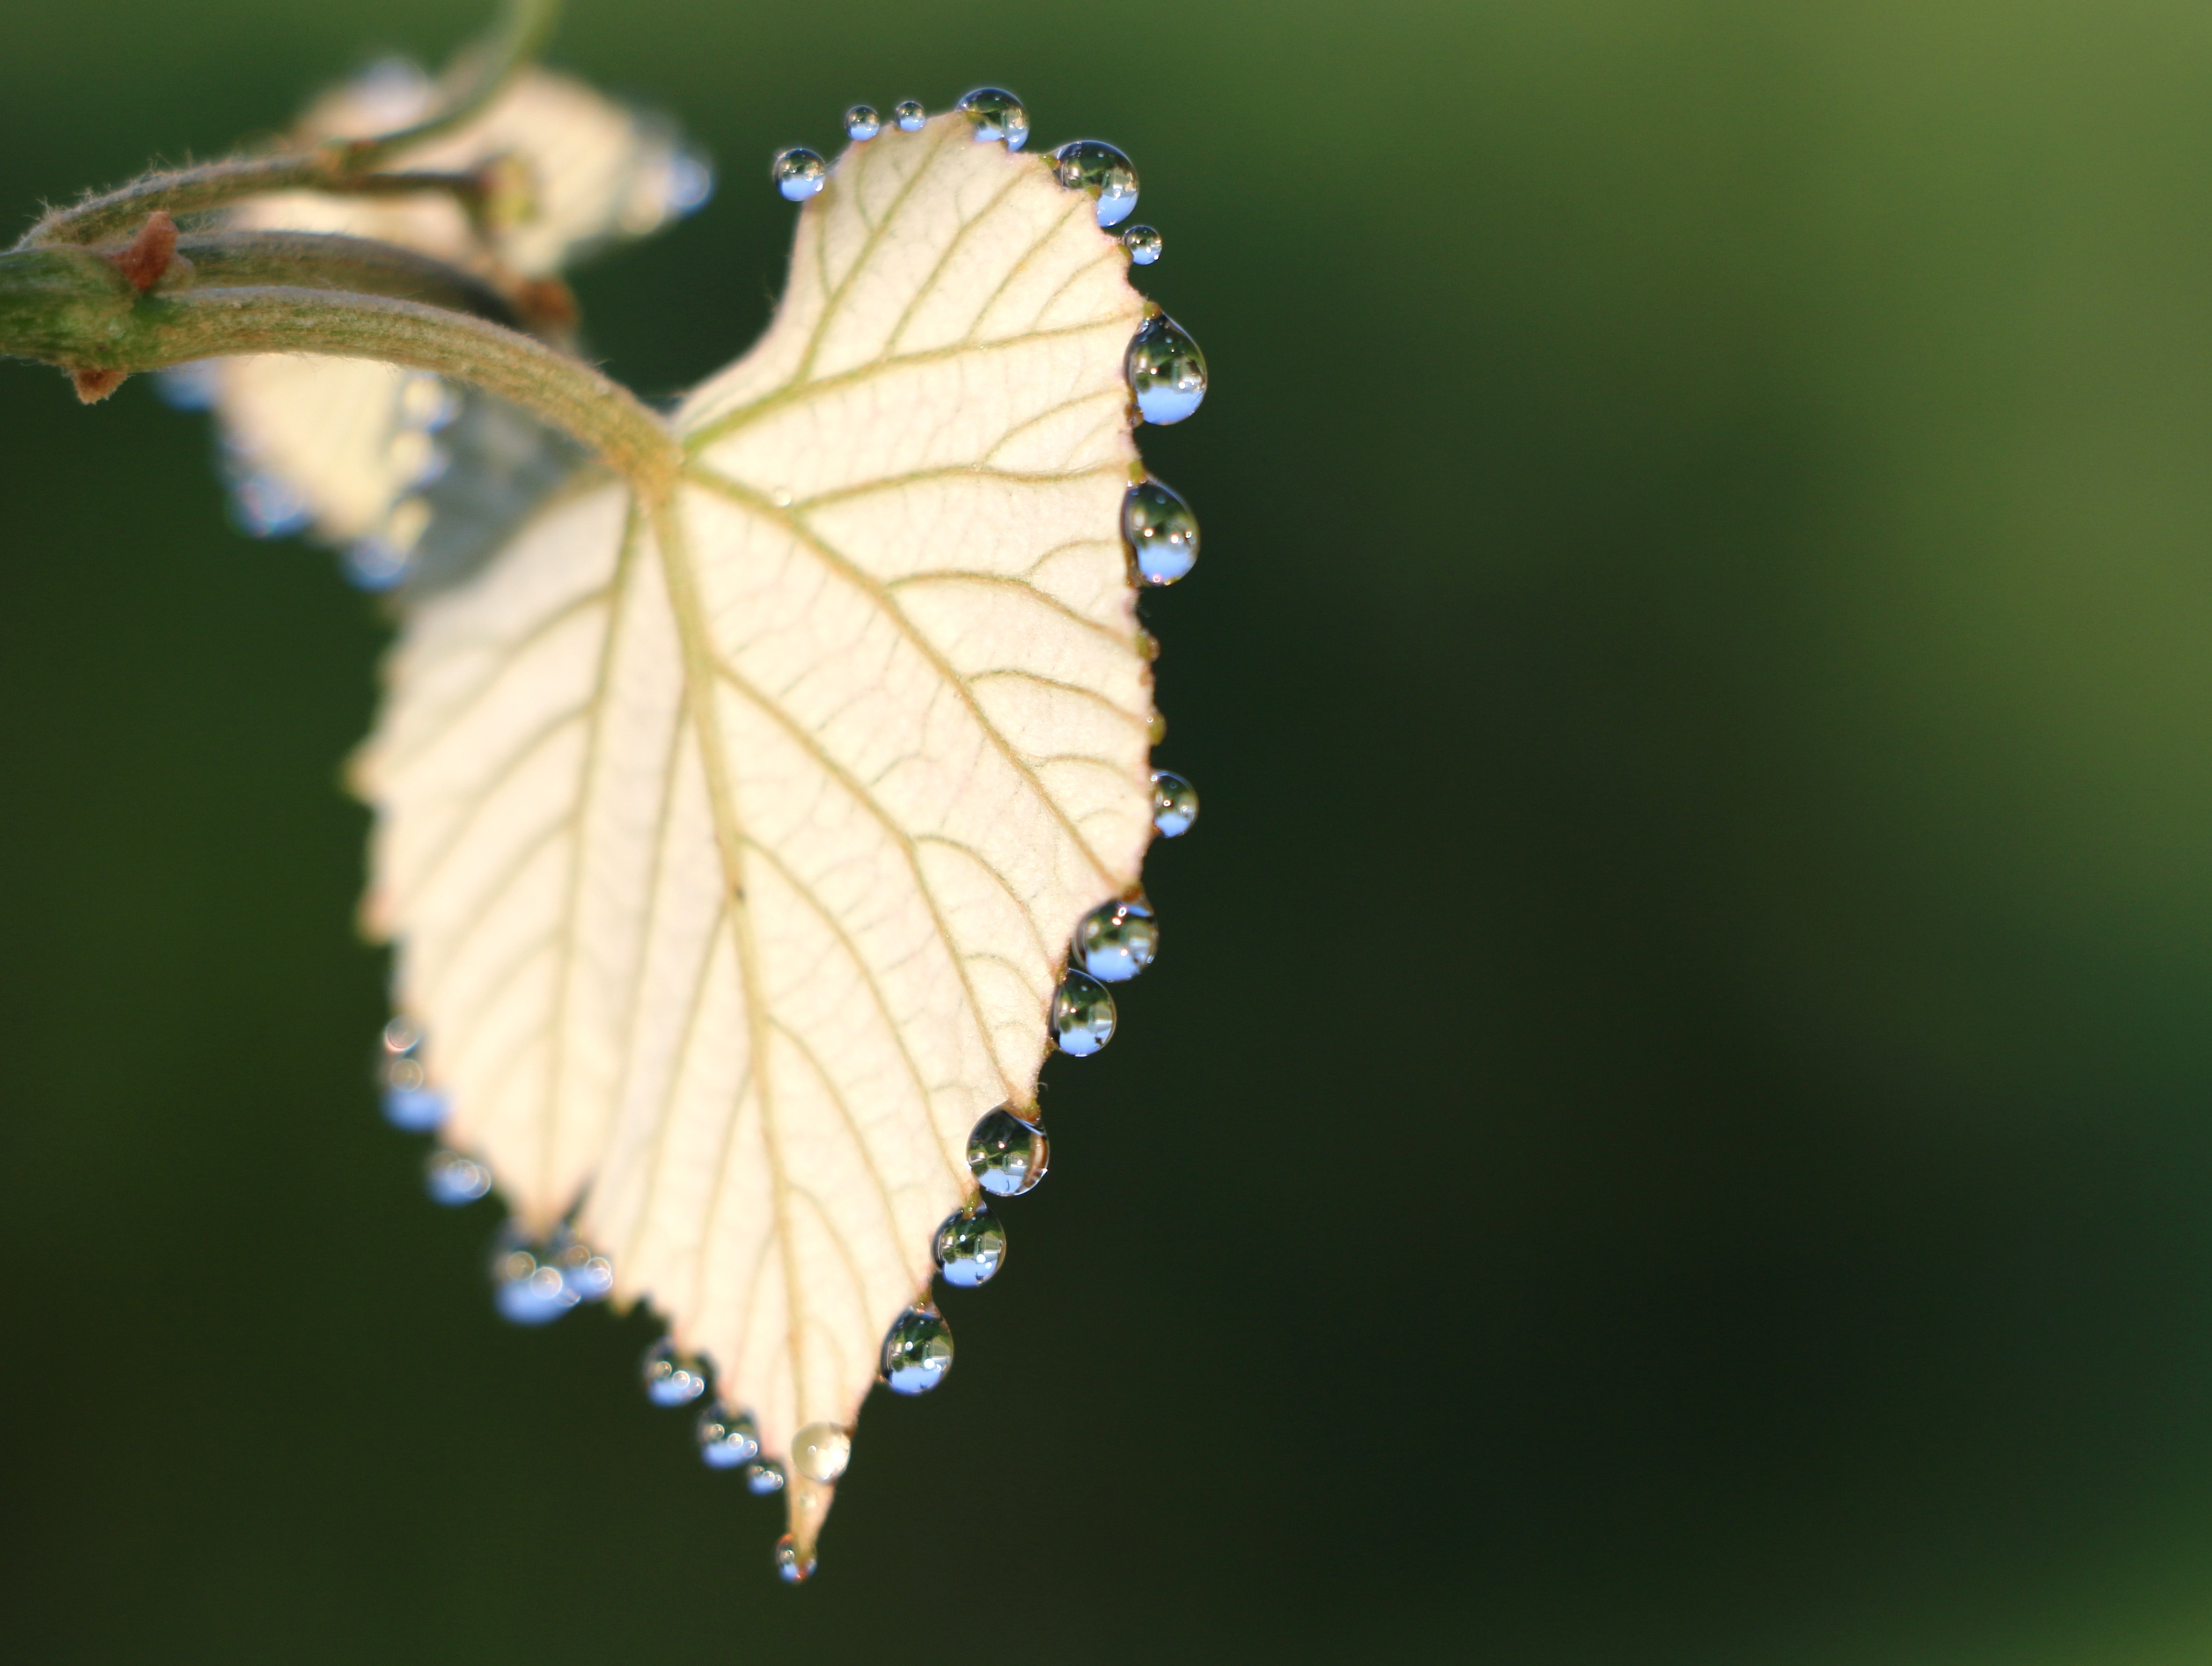 white leaf plant